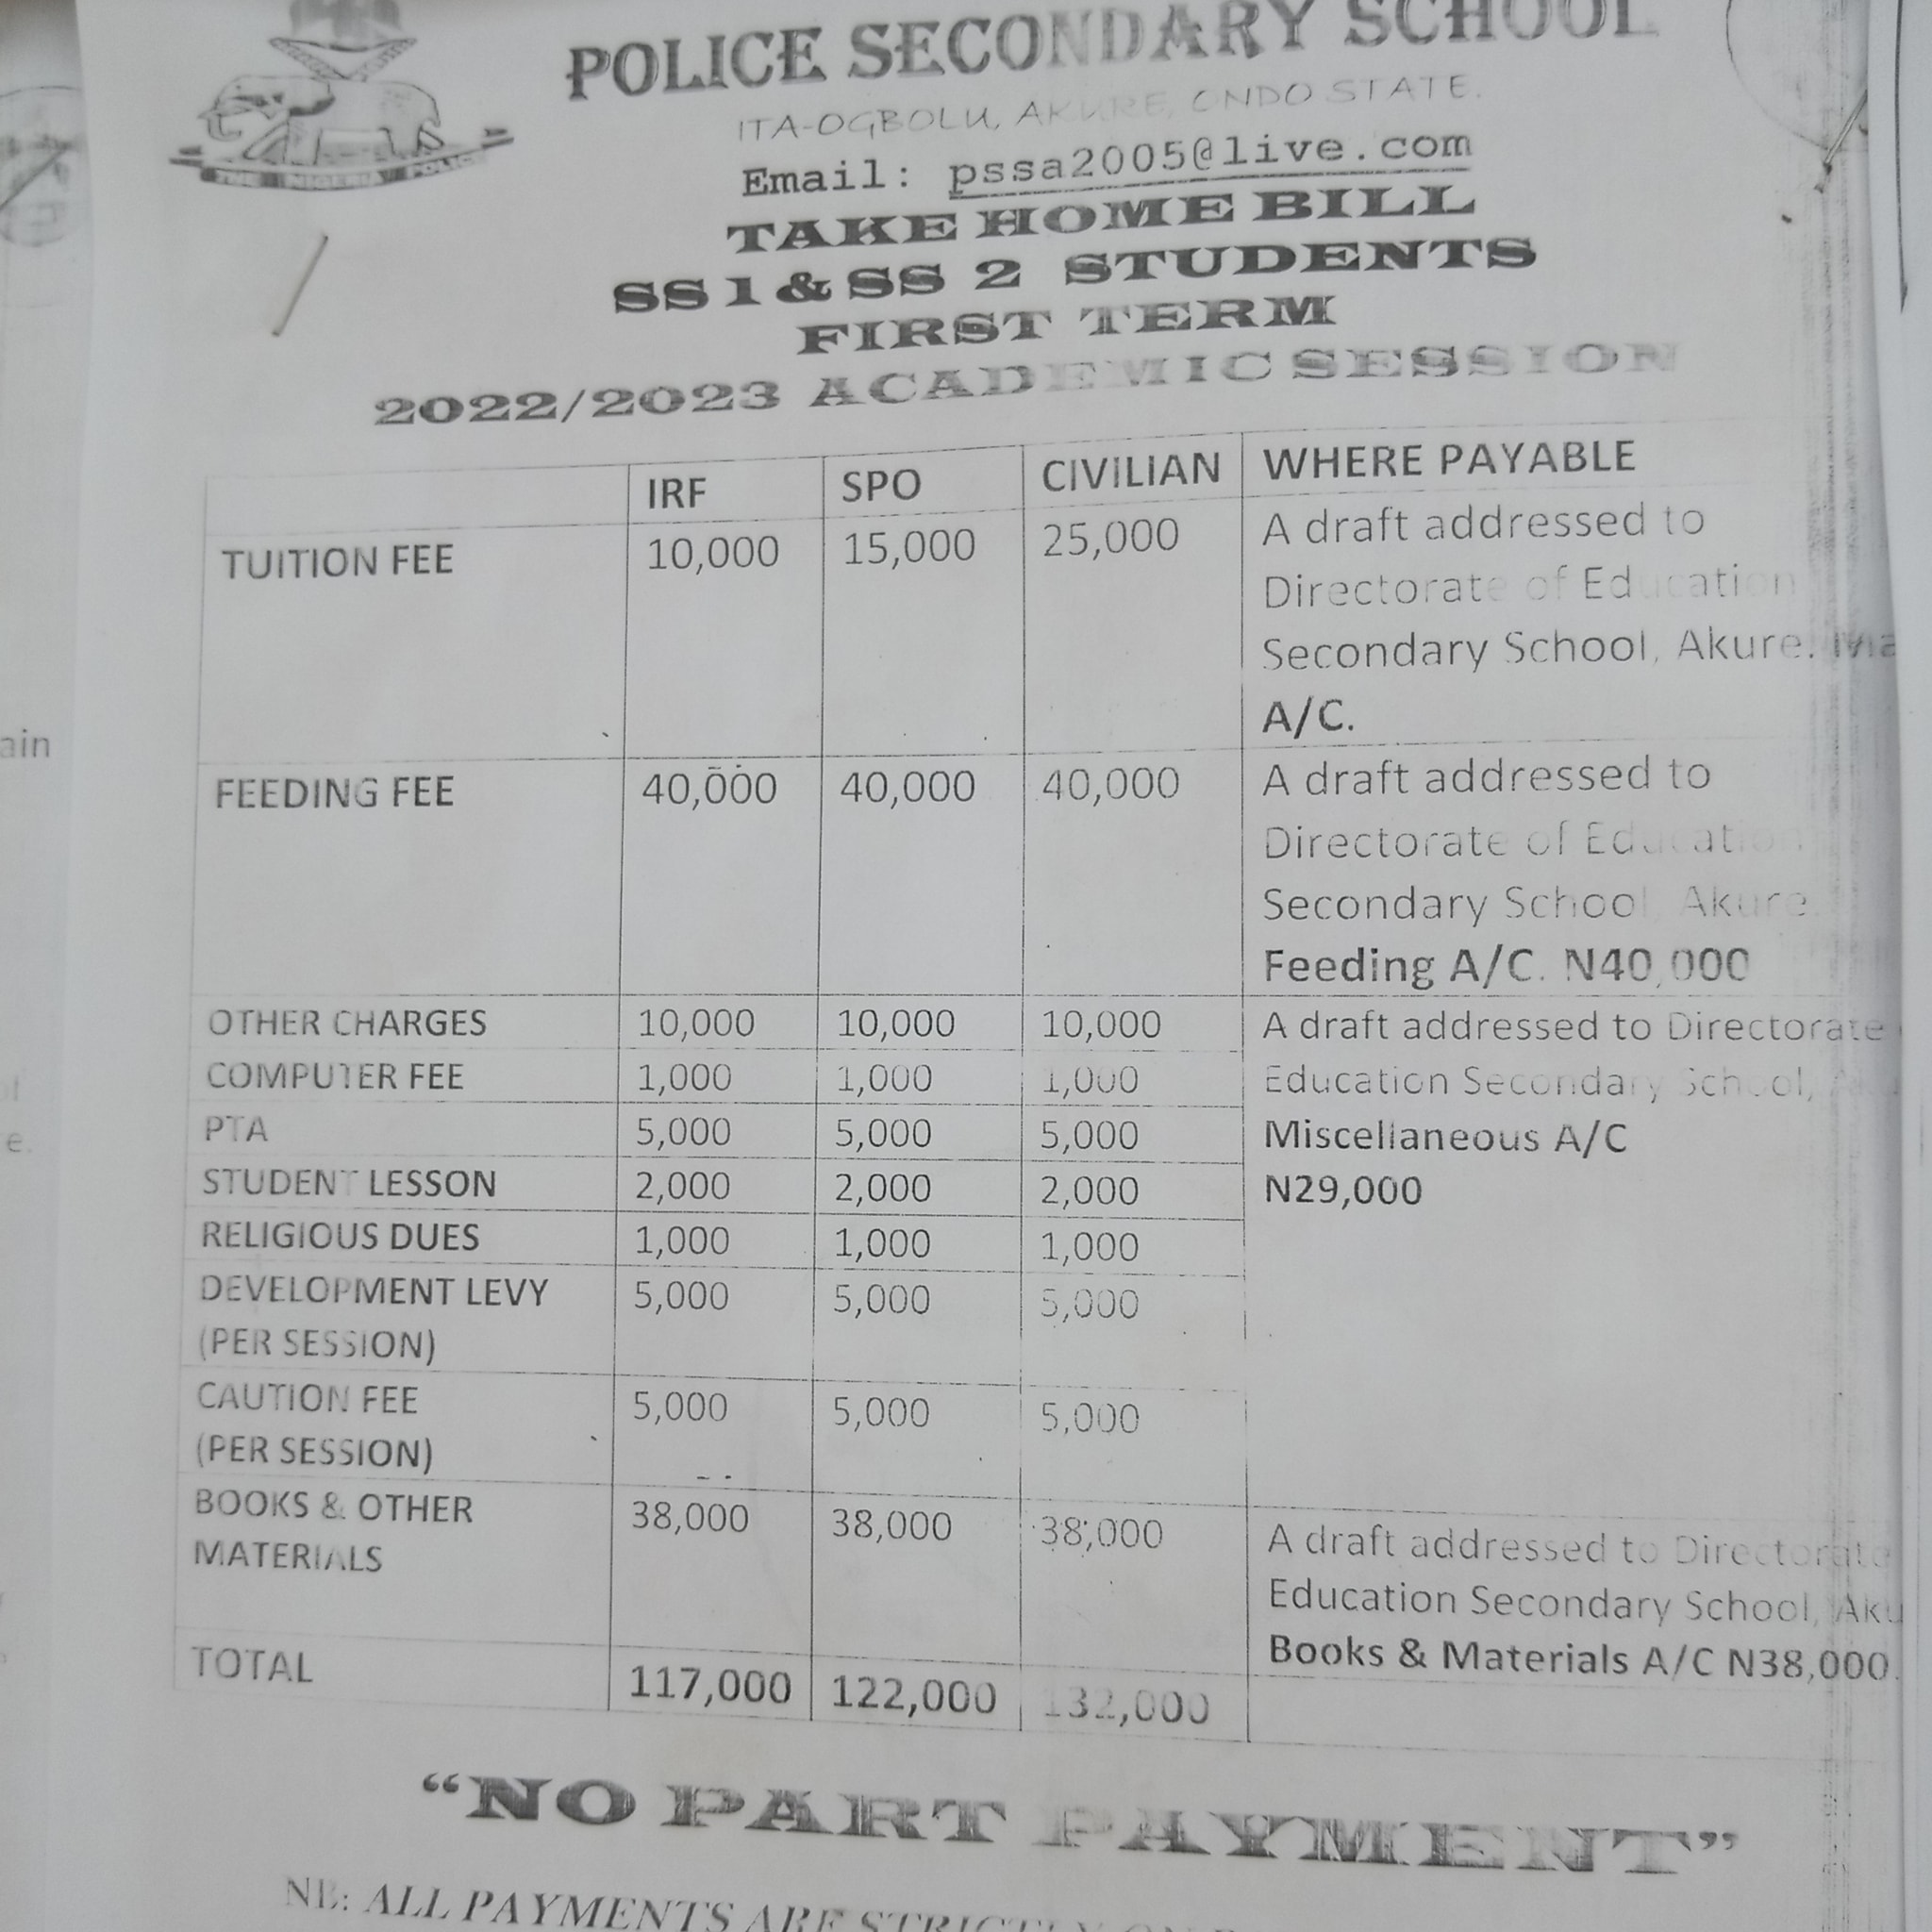 Police Secondary Schools School Fees Schedule 2022/2023